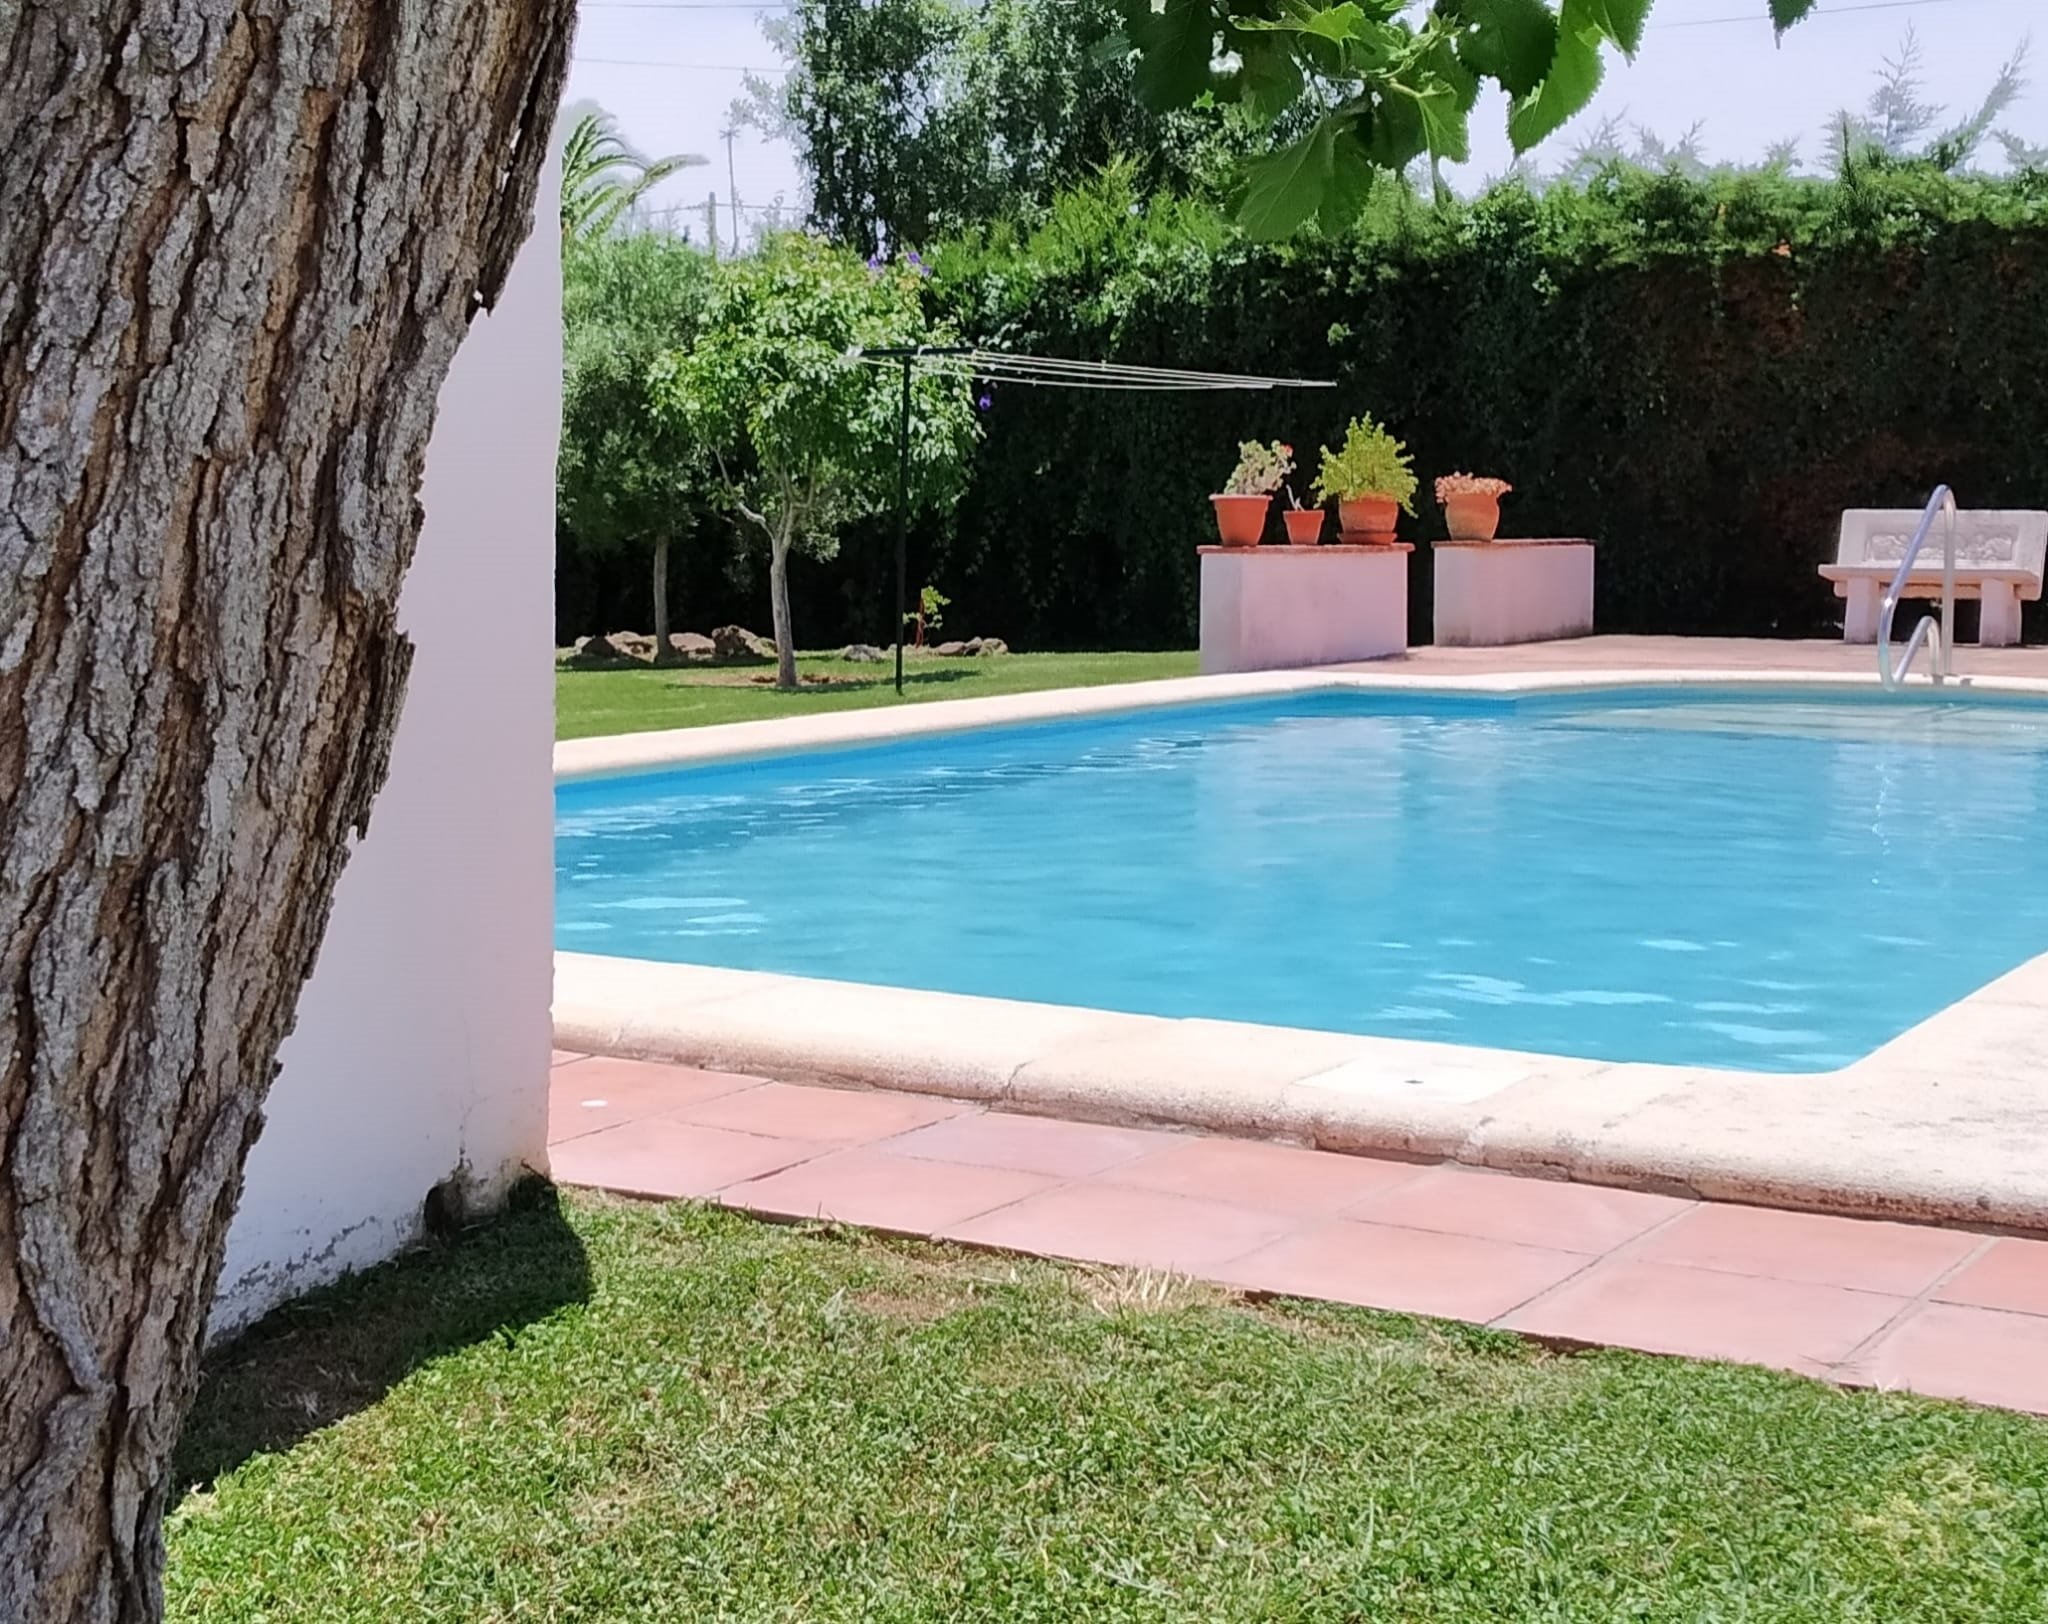 EuropaPress 5138530 piscina particular vivienda residencial chiclana frontera cadiz